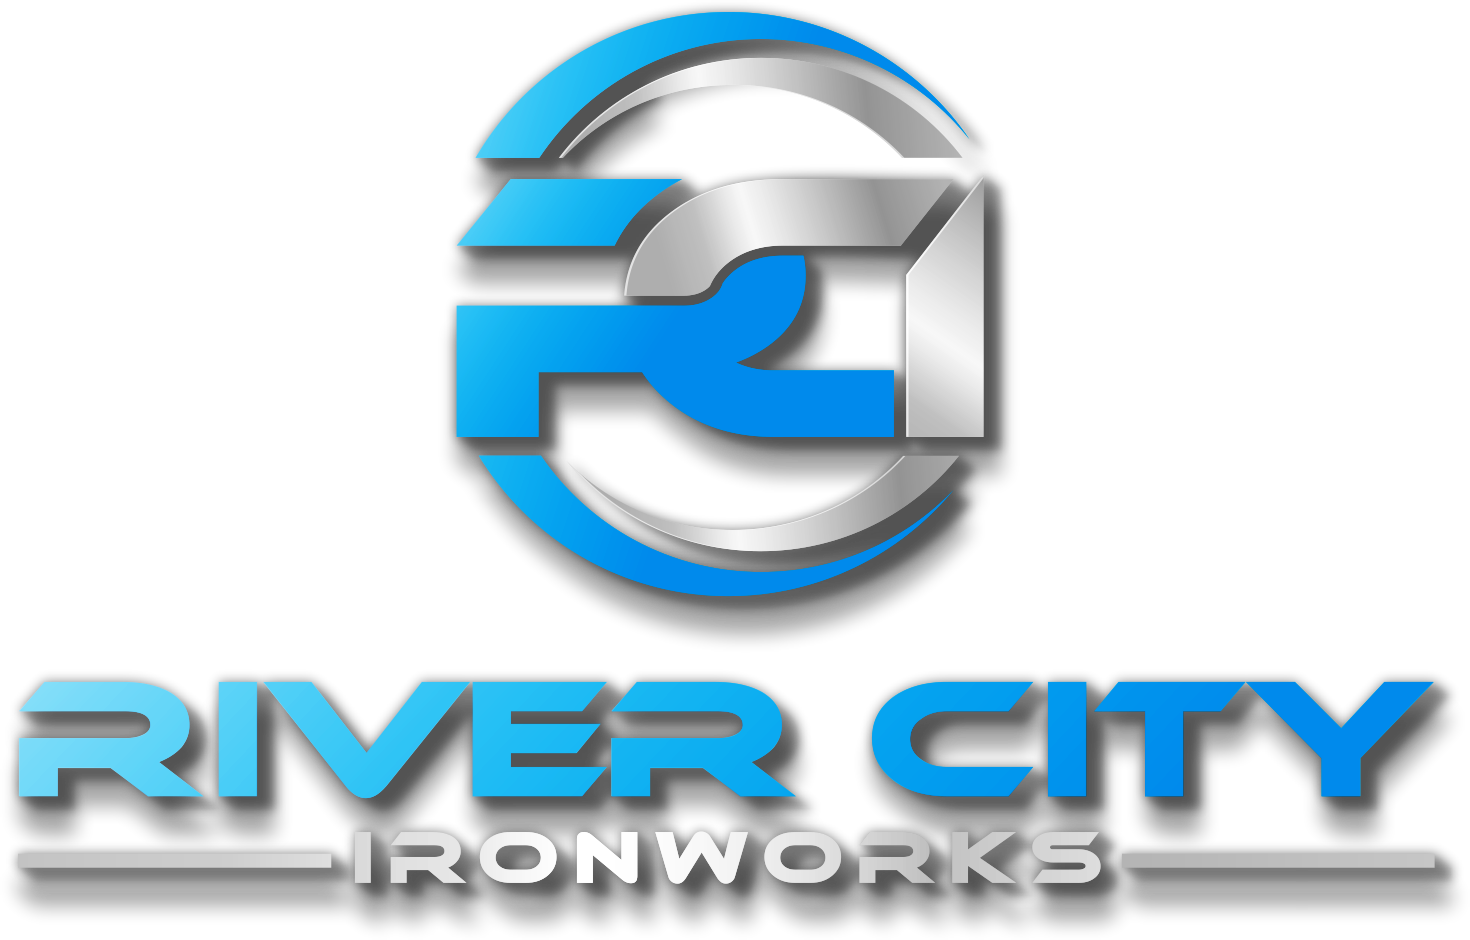 River City Iron